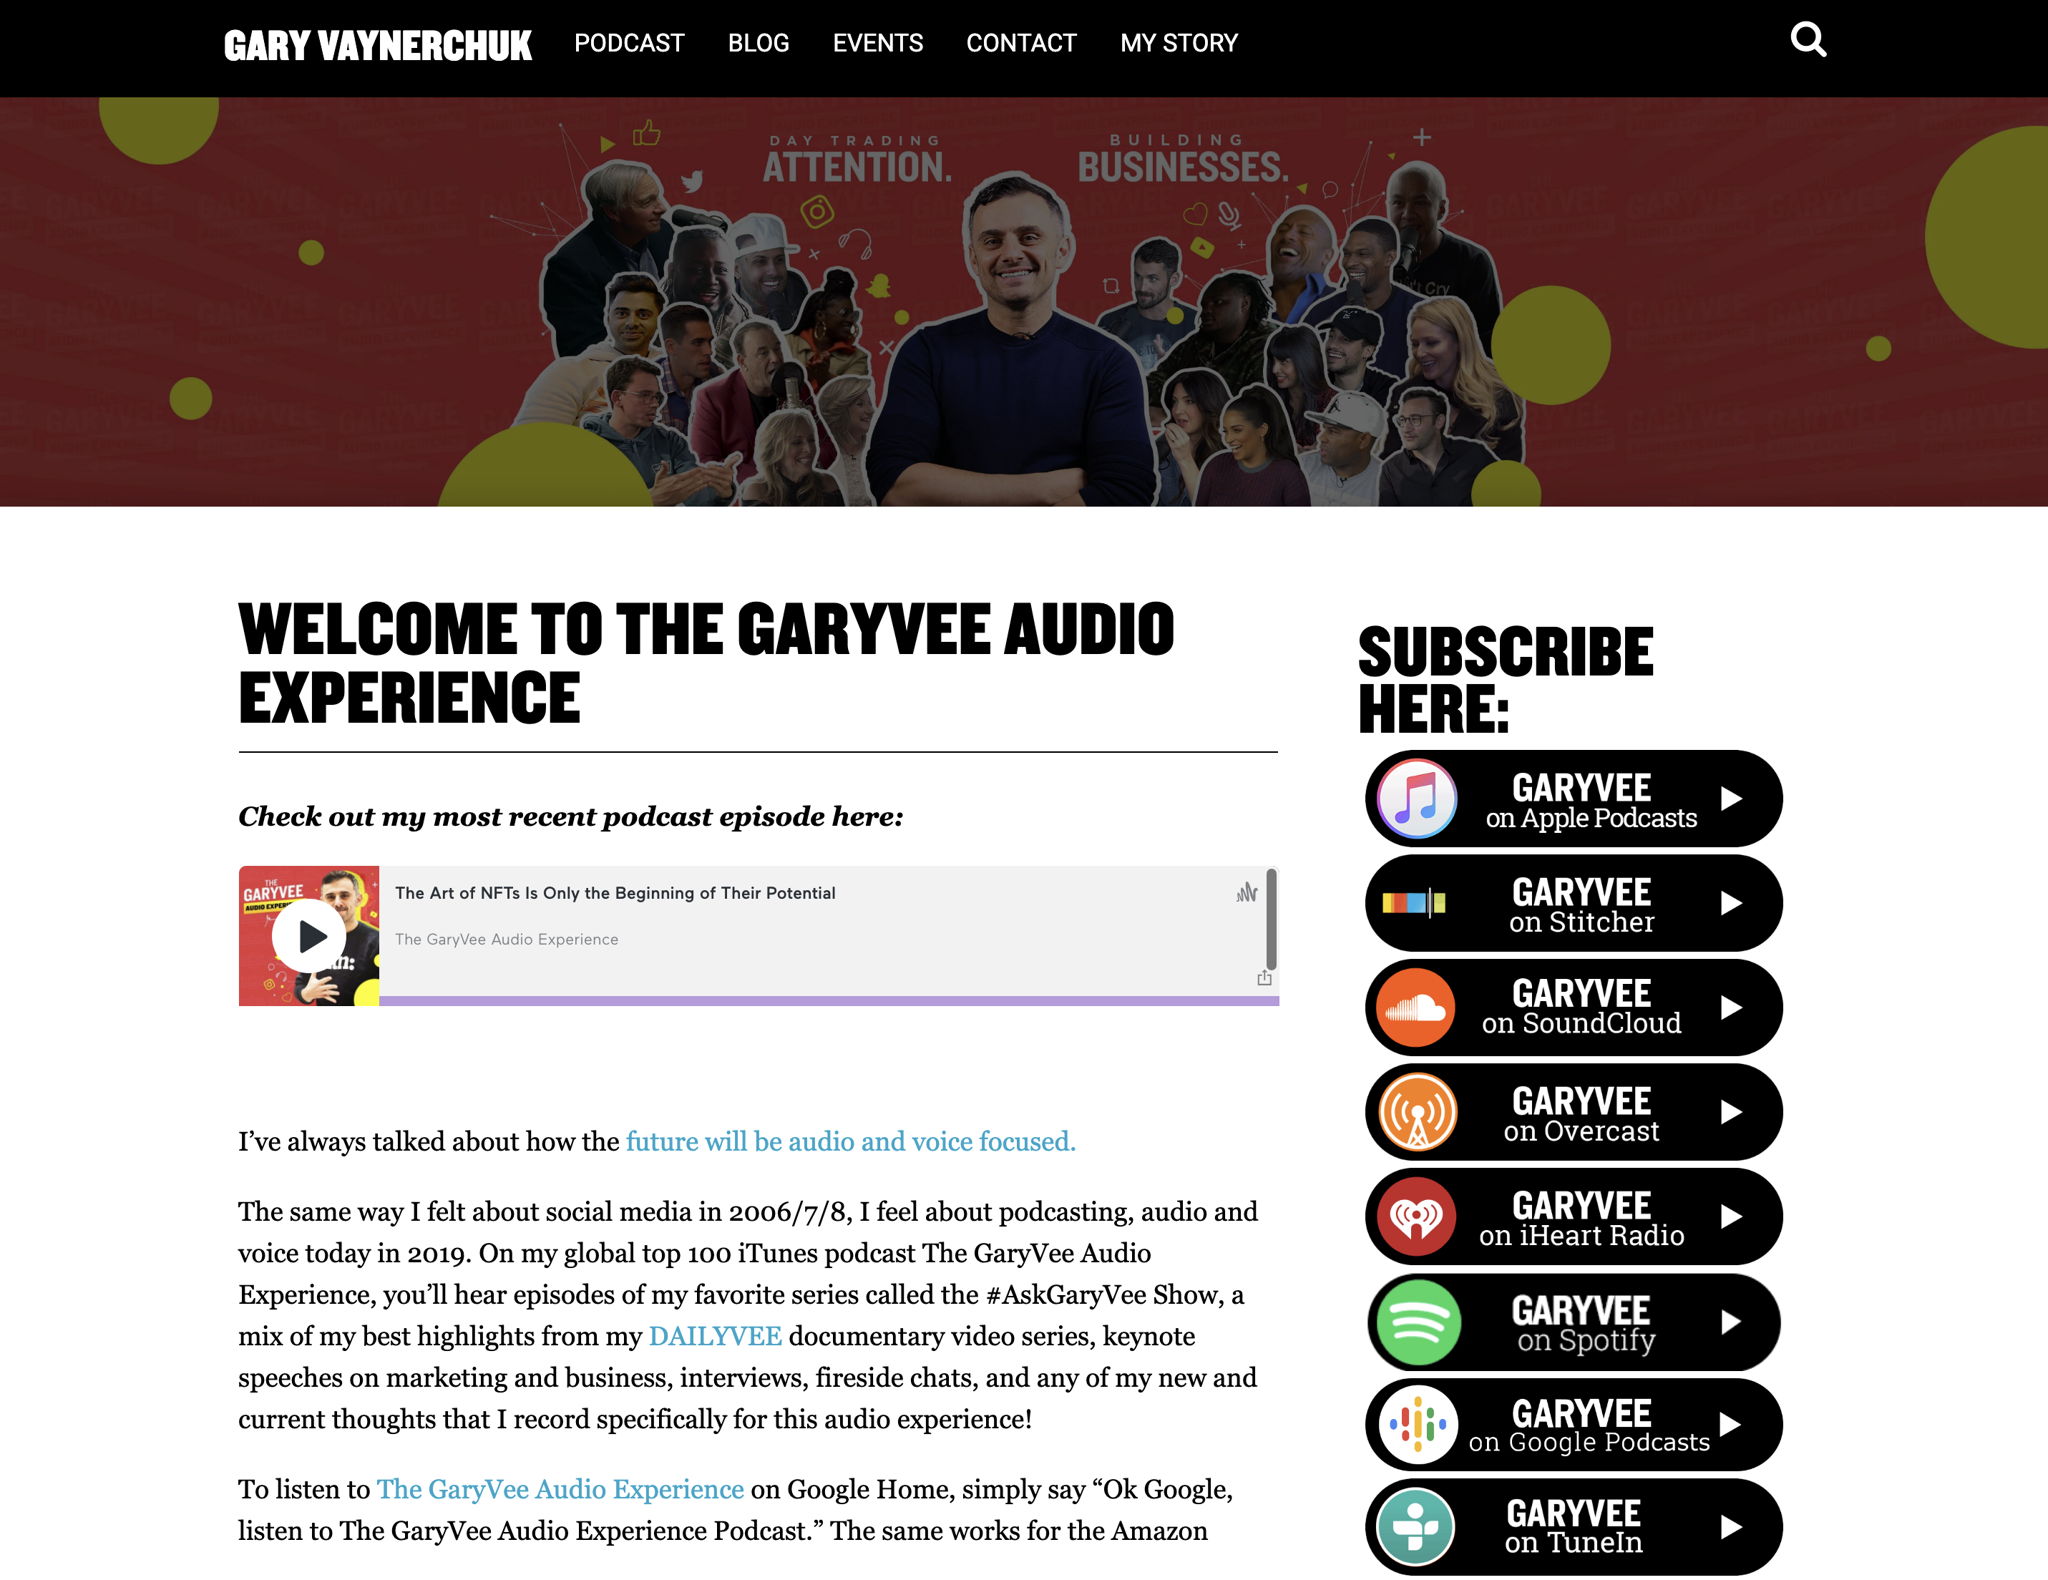 The Gary Vee Audio Experience